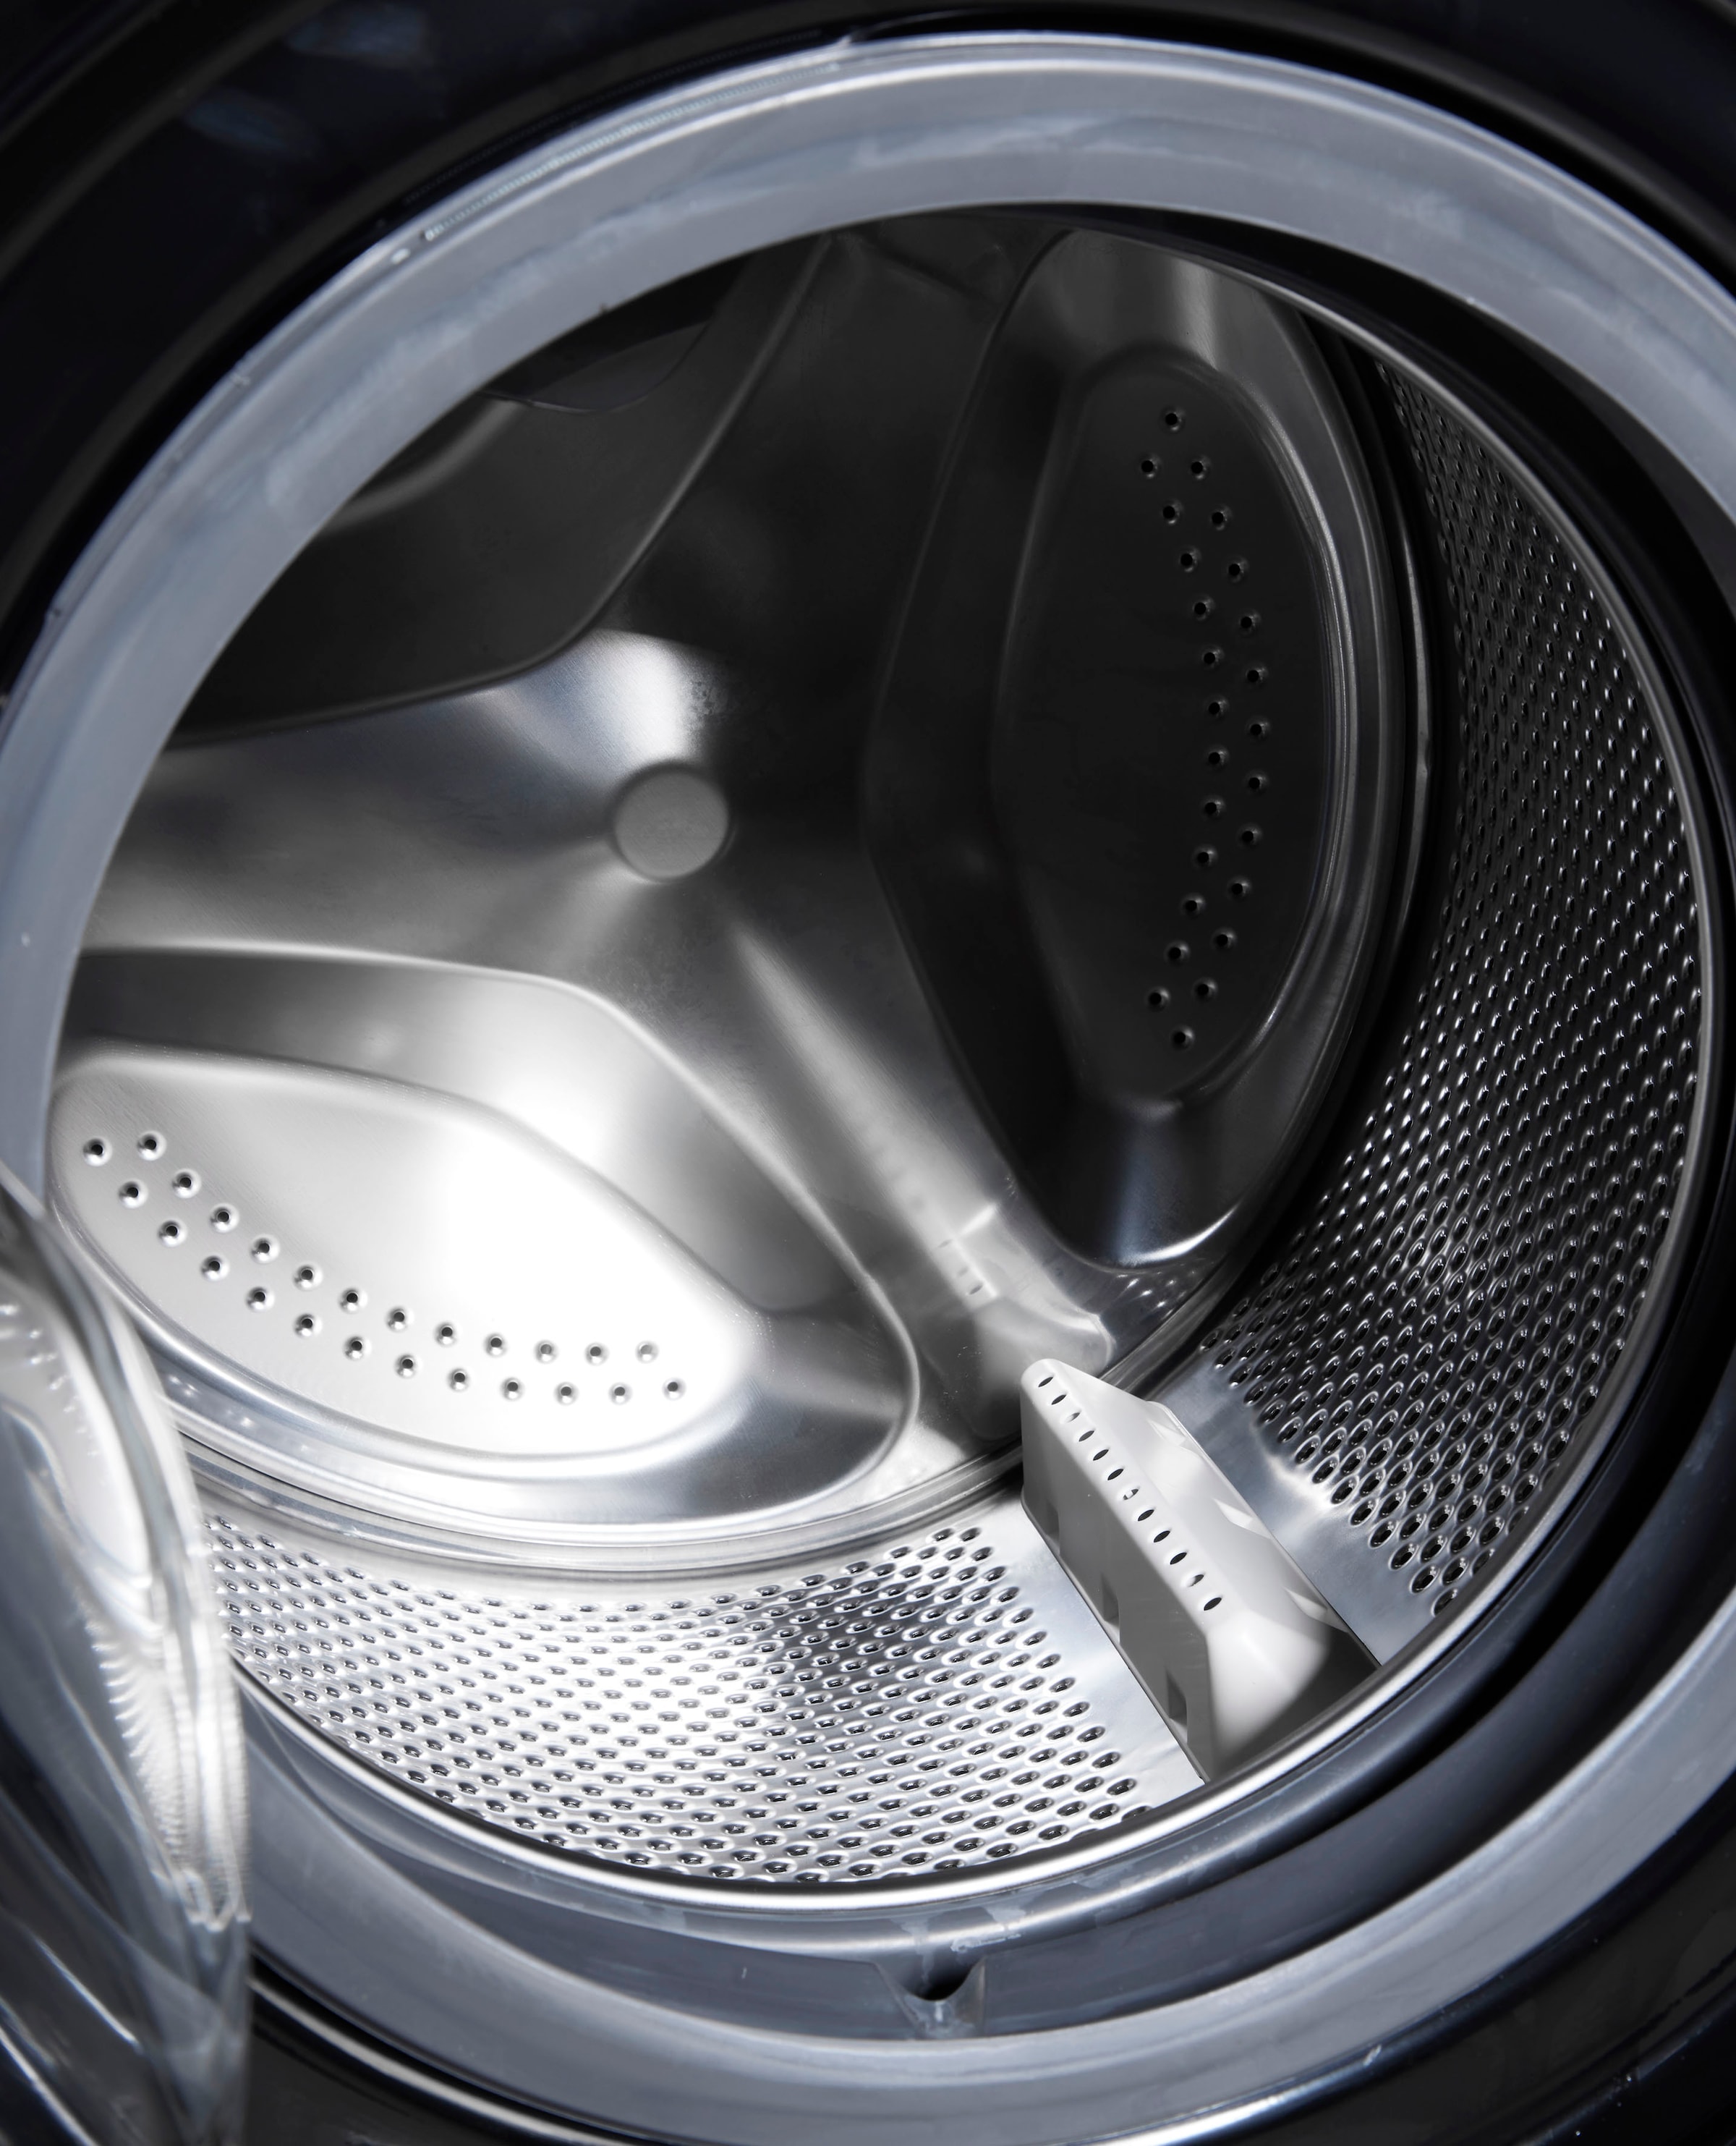 BAUKNECHT Waschmaschine »WM BB 8A«, WM BB 8A, 8 kg, 1400 U/min jetzt online  bei OTTO